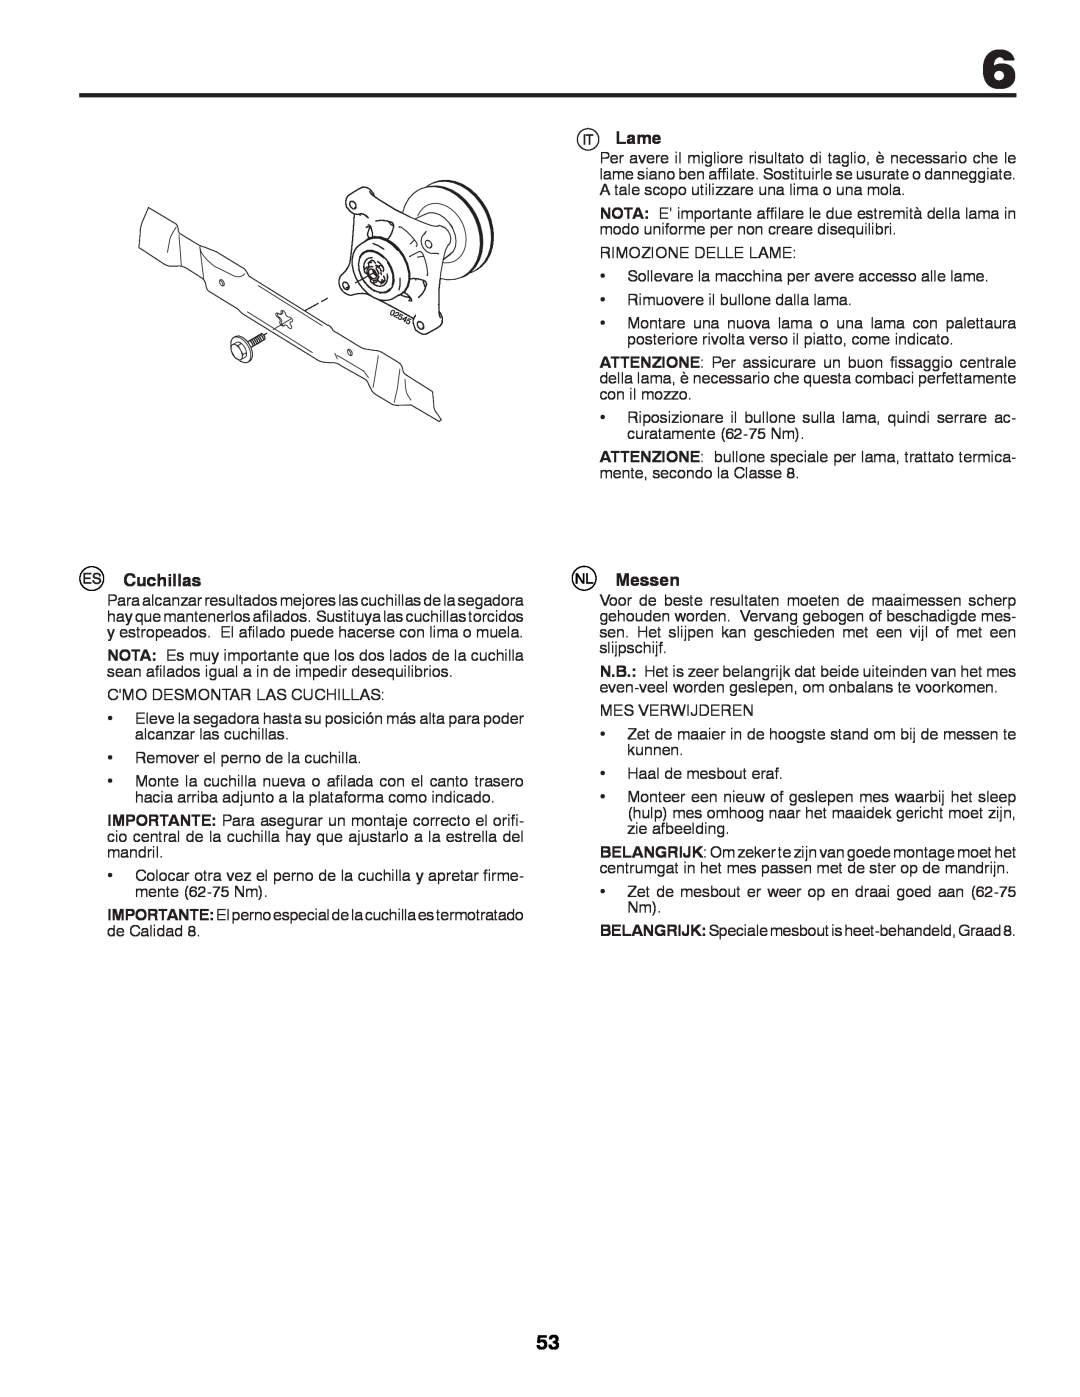 Partner Tech P11577 instruction manual Cuchillas, Lame, Messen 